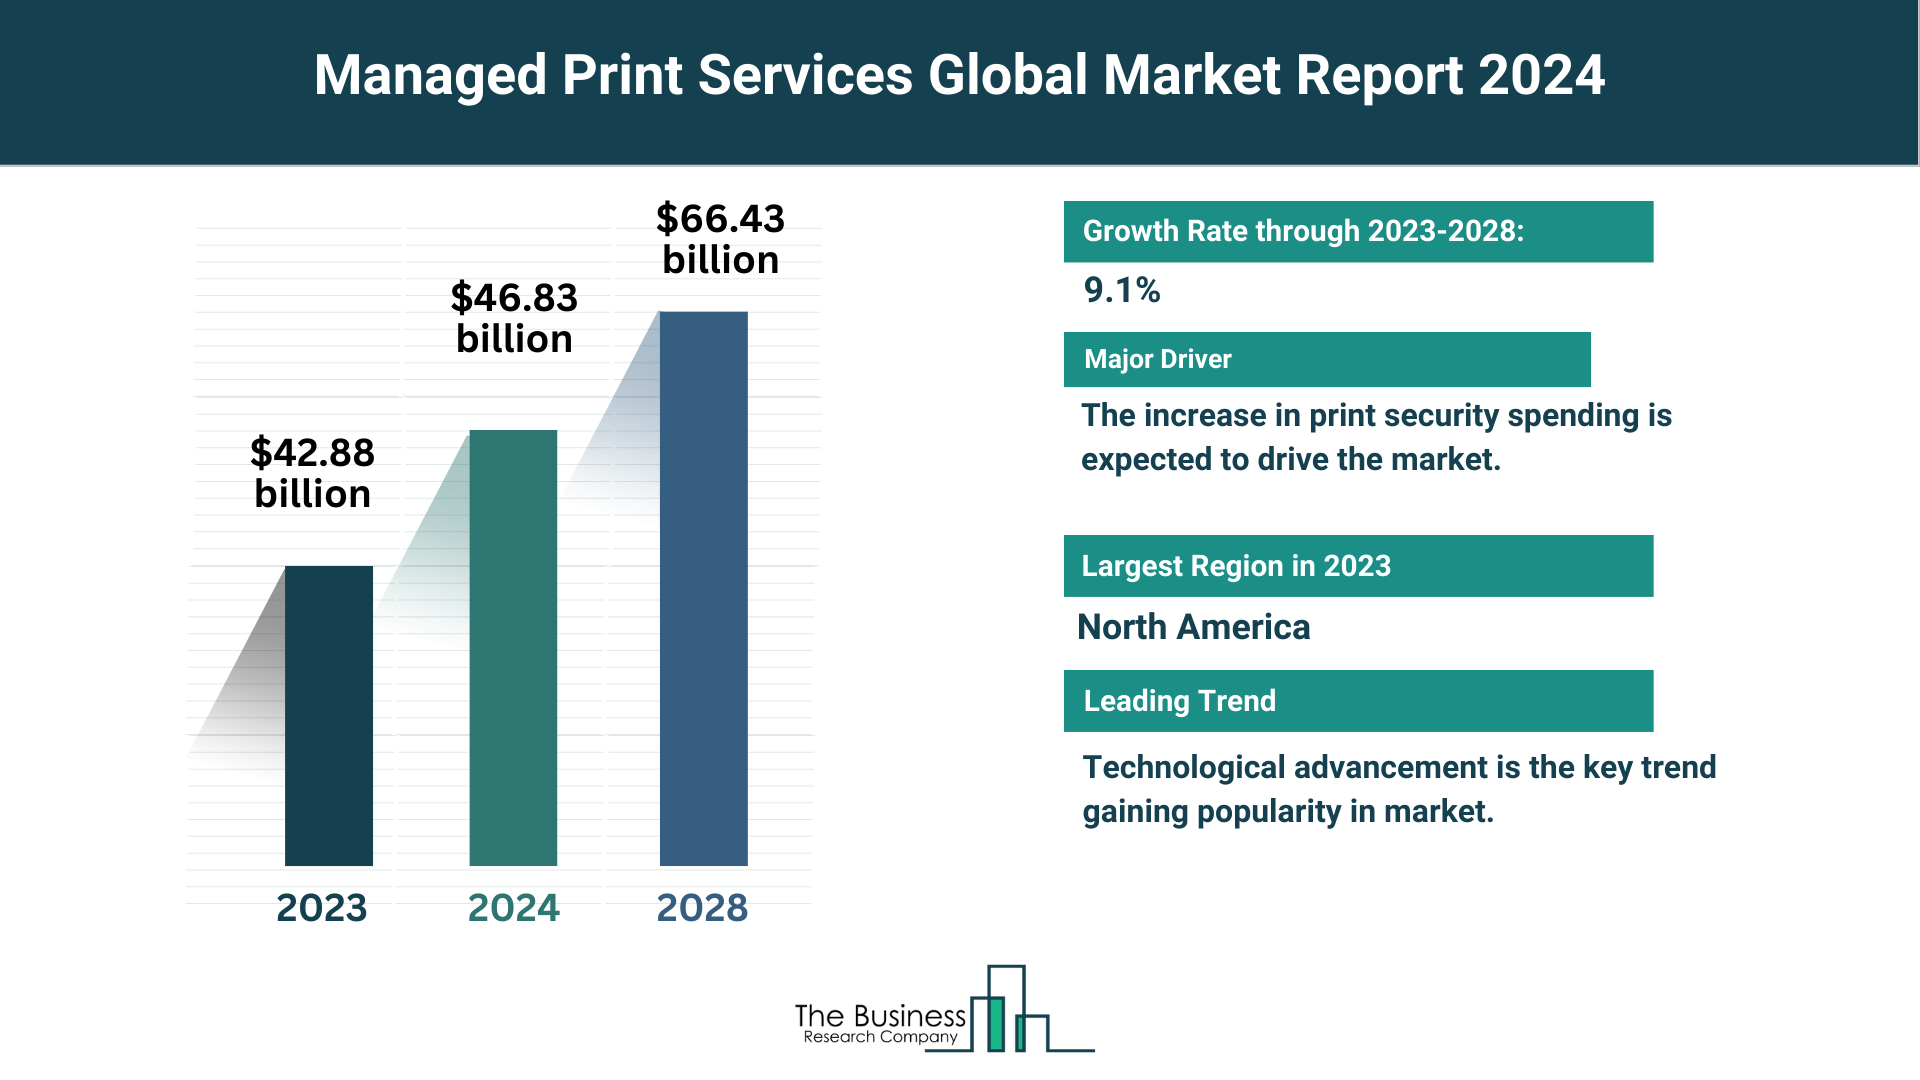 Global Managed Print Services Market